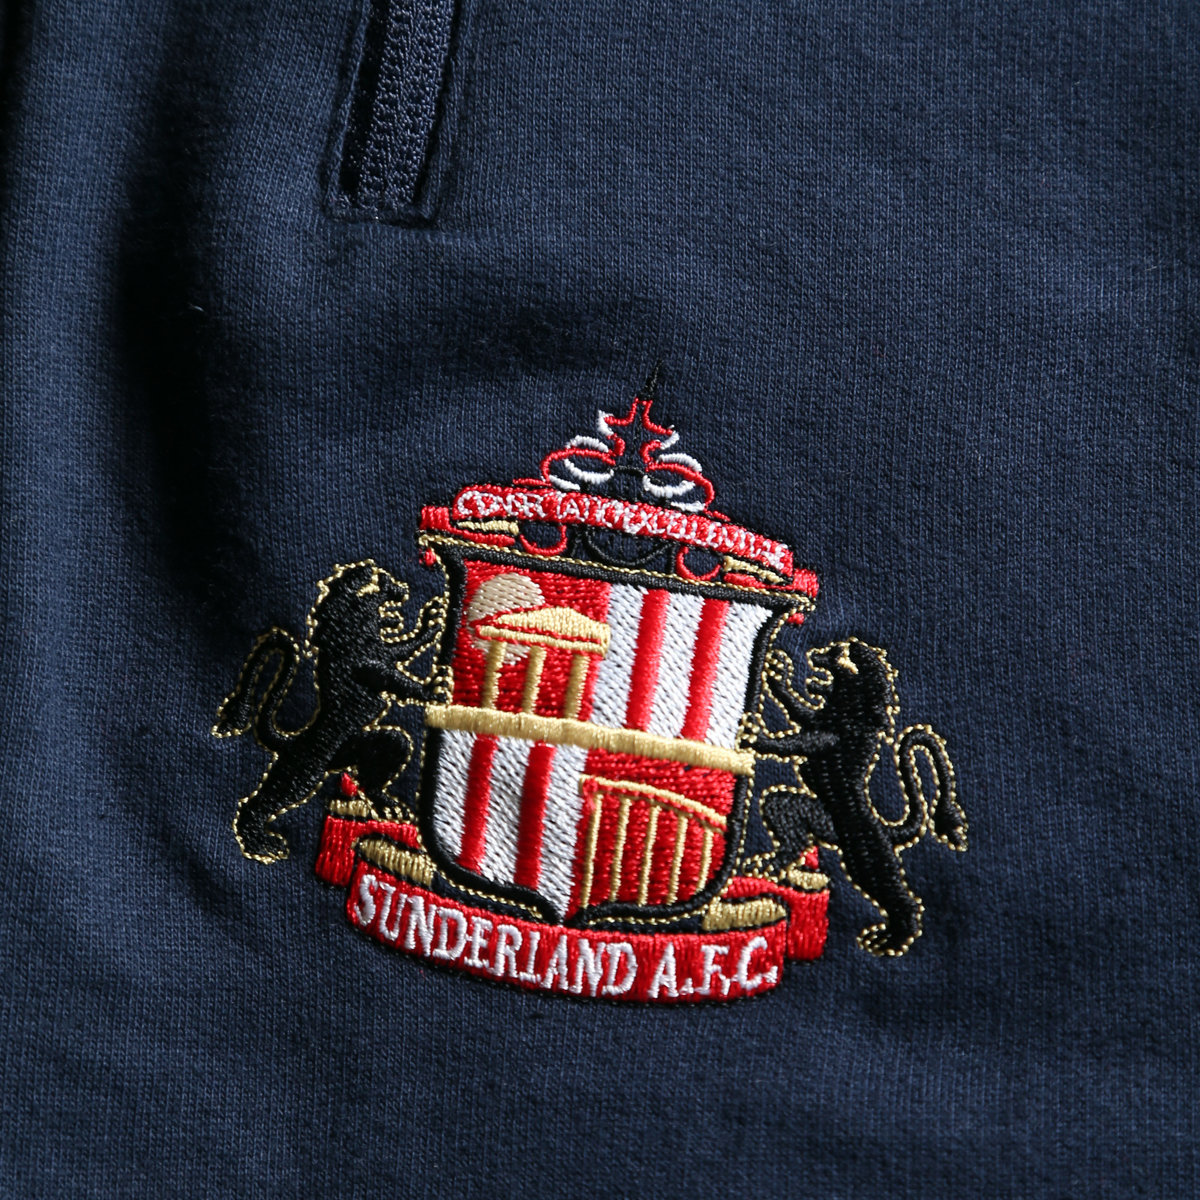 Buy the SAFC Lounge Pants online at Sunderland AFC Store